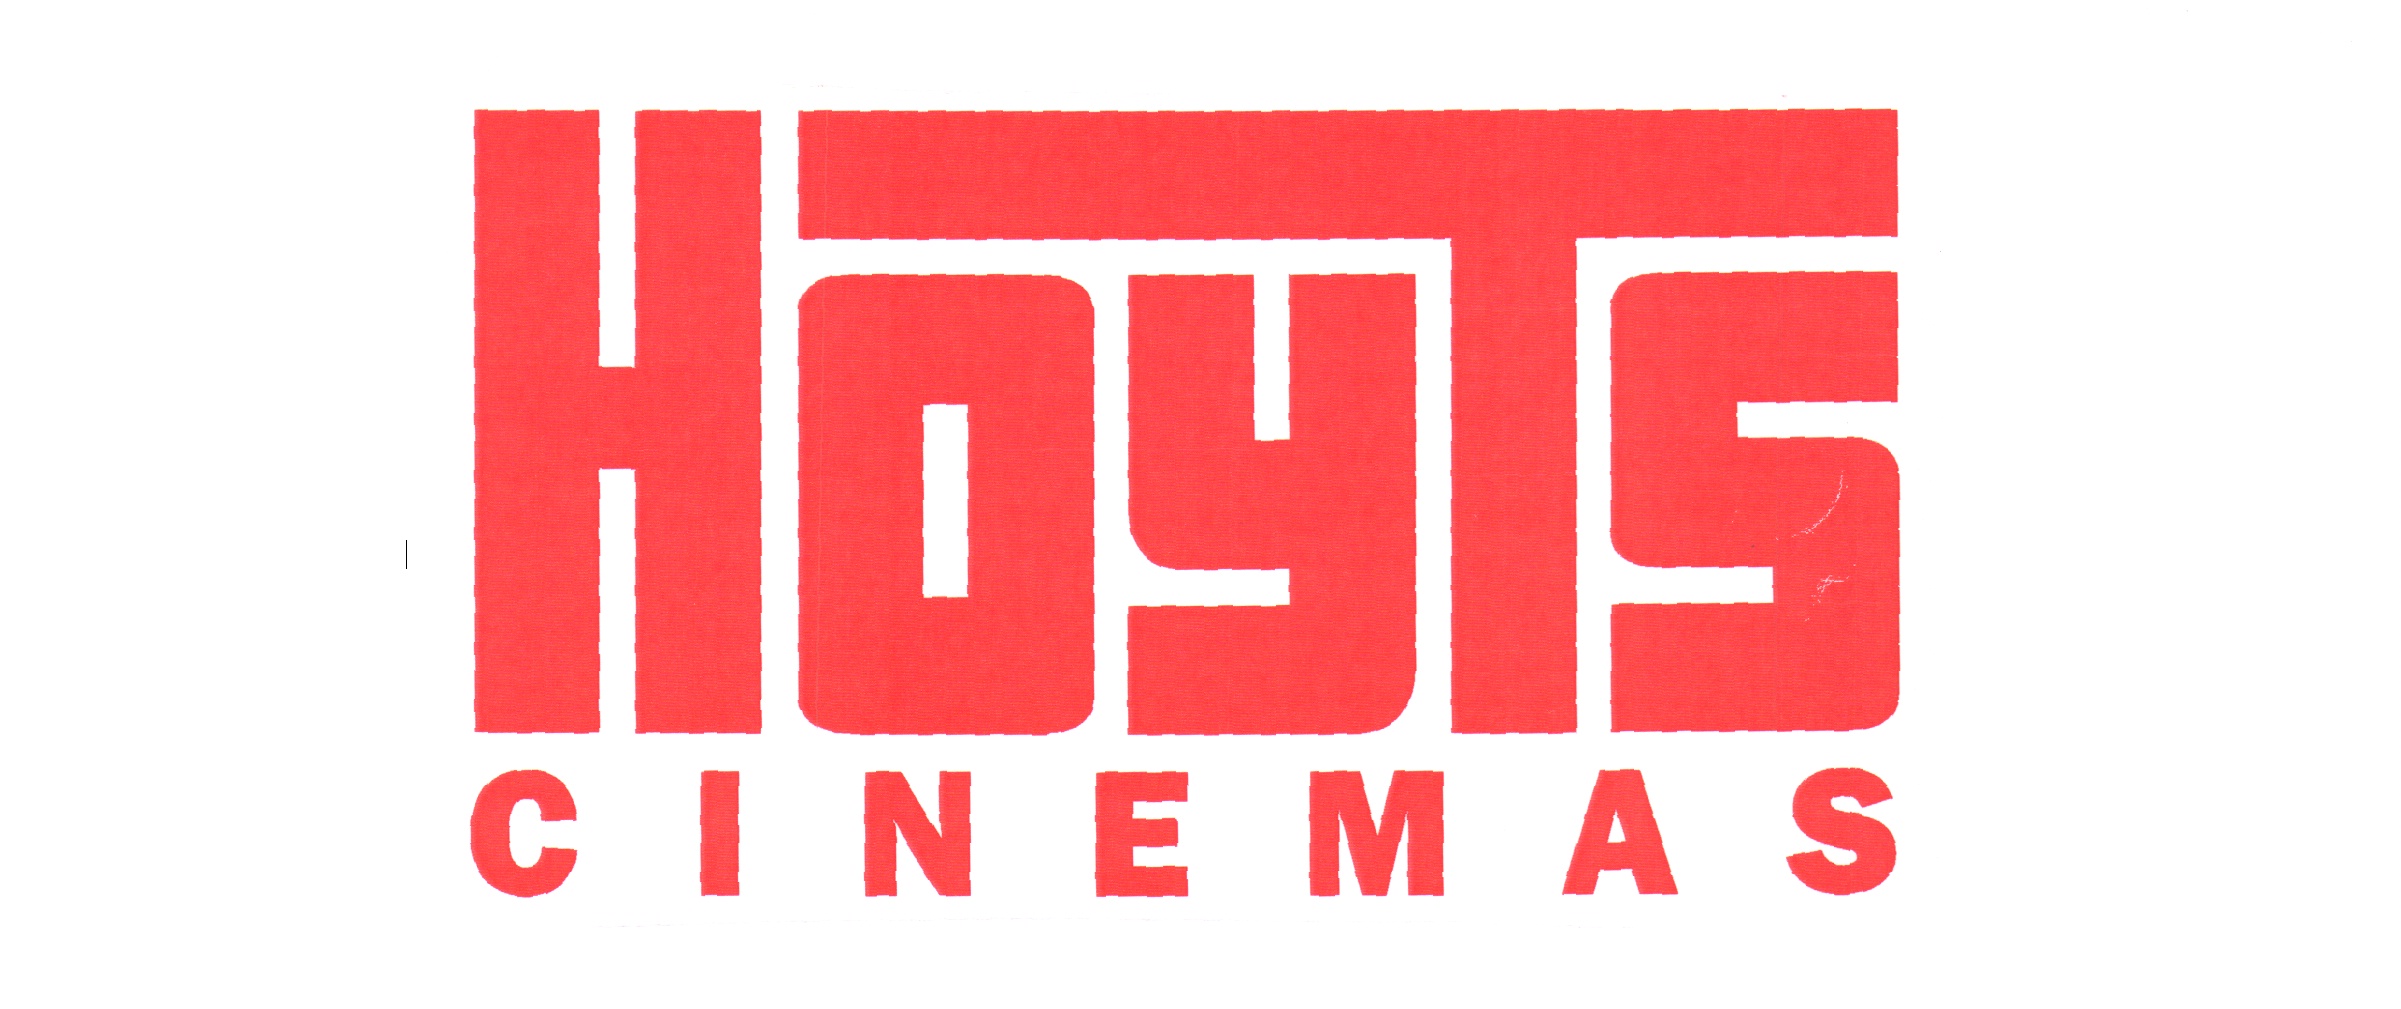 Hoyts Cinemas